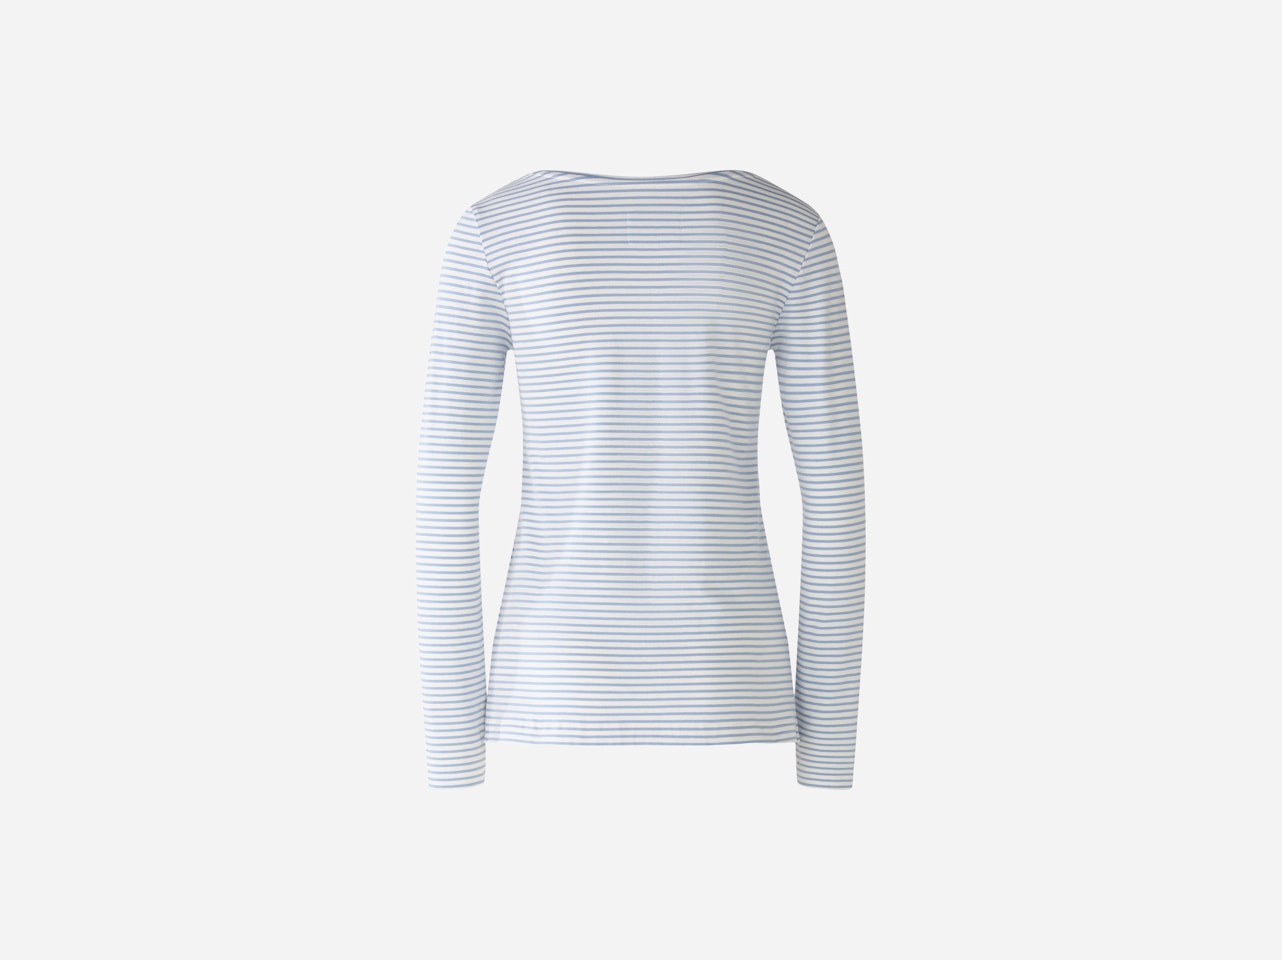 Bild 7 von Long-sleeved shirt cotton-modal blend in white blue | Oui